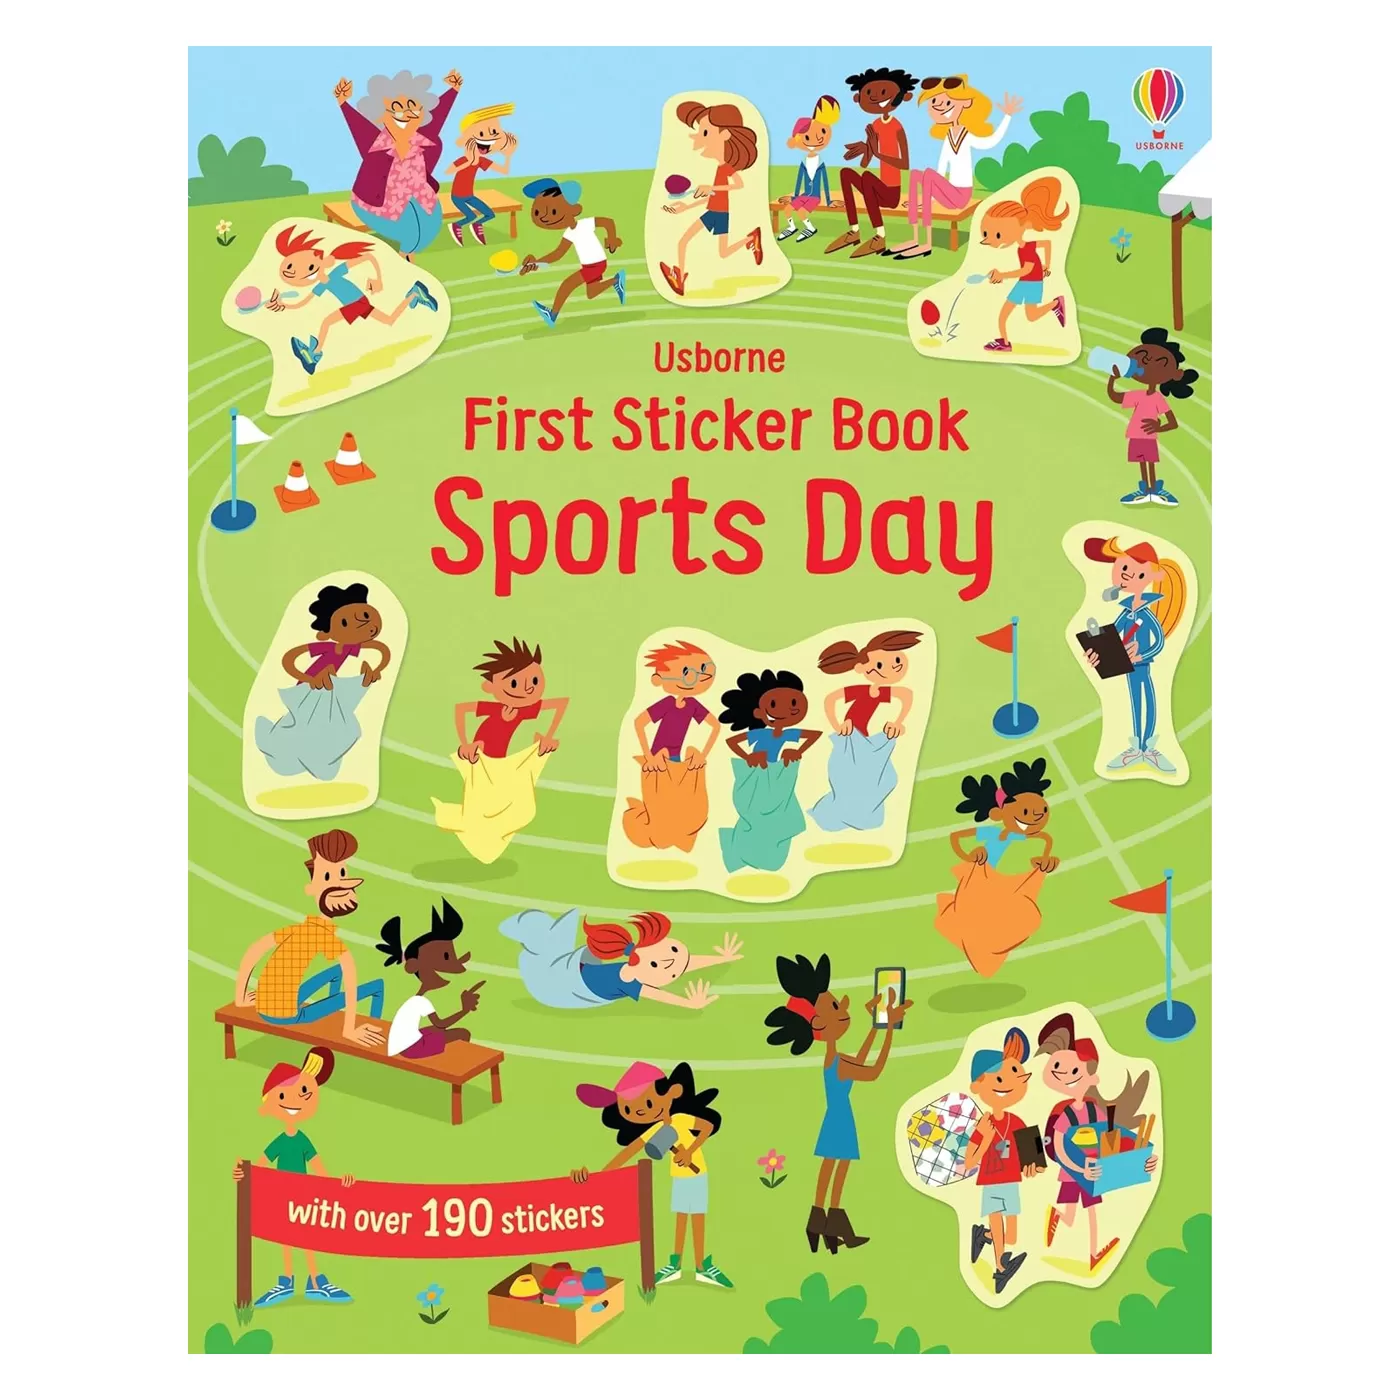  First Sticker Book Sports Day